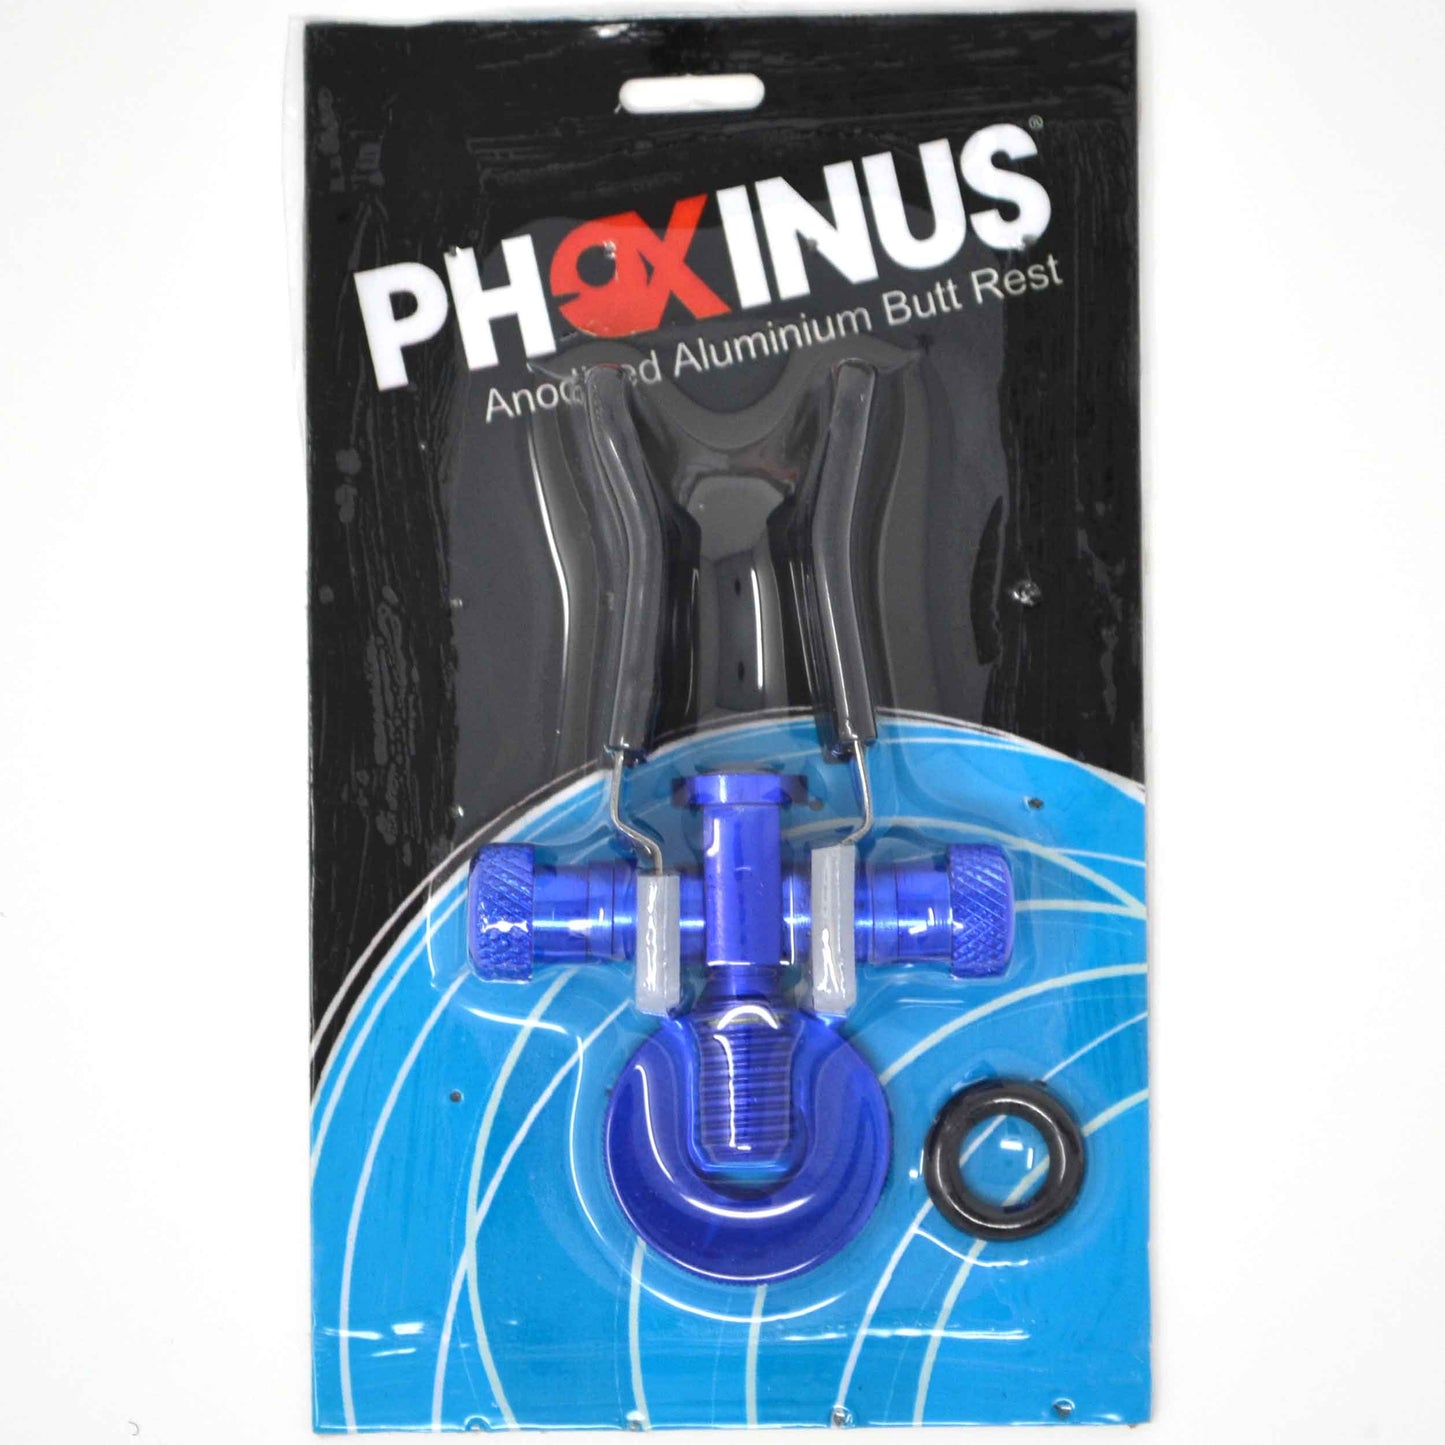 3 Phoxinus Adjustable Anodised Aluminium Butt Rests / Rod Rests